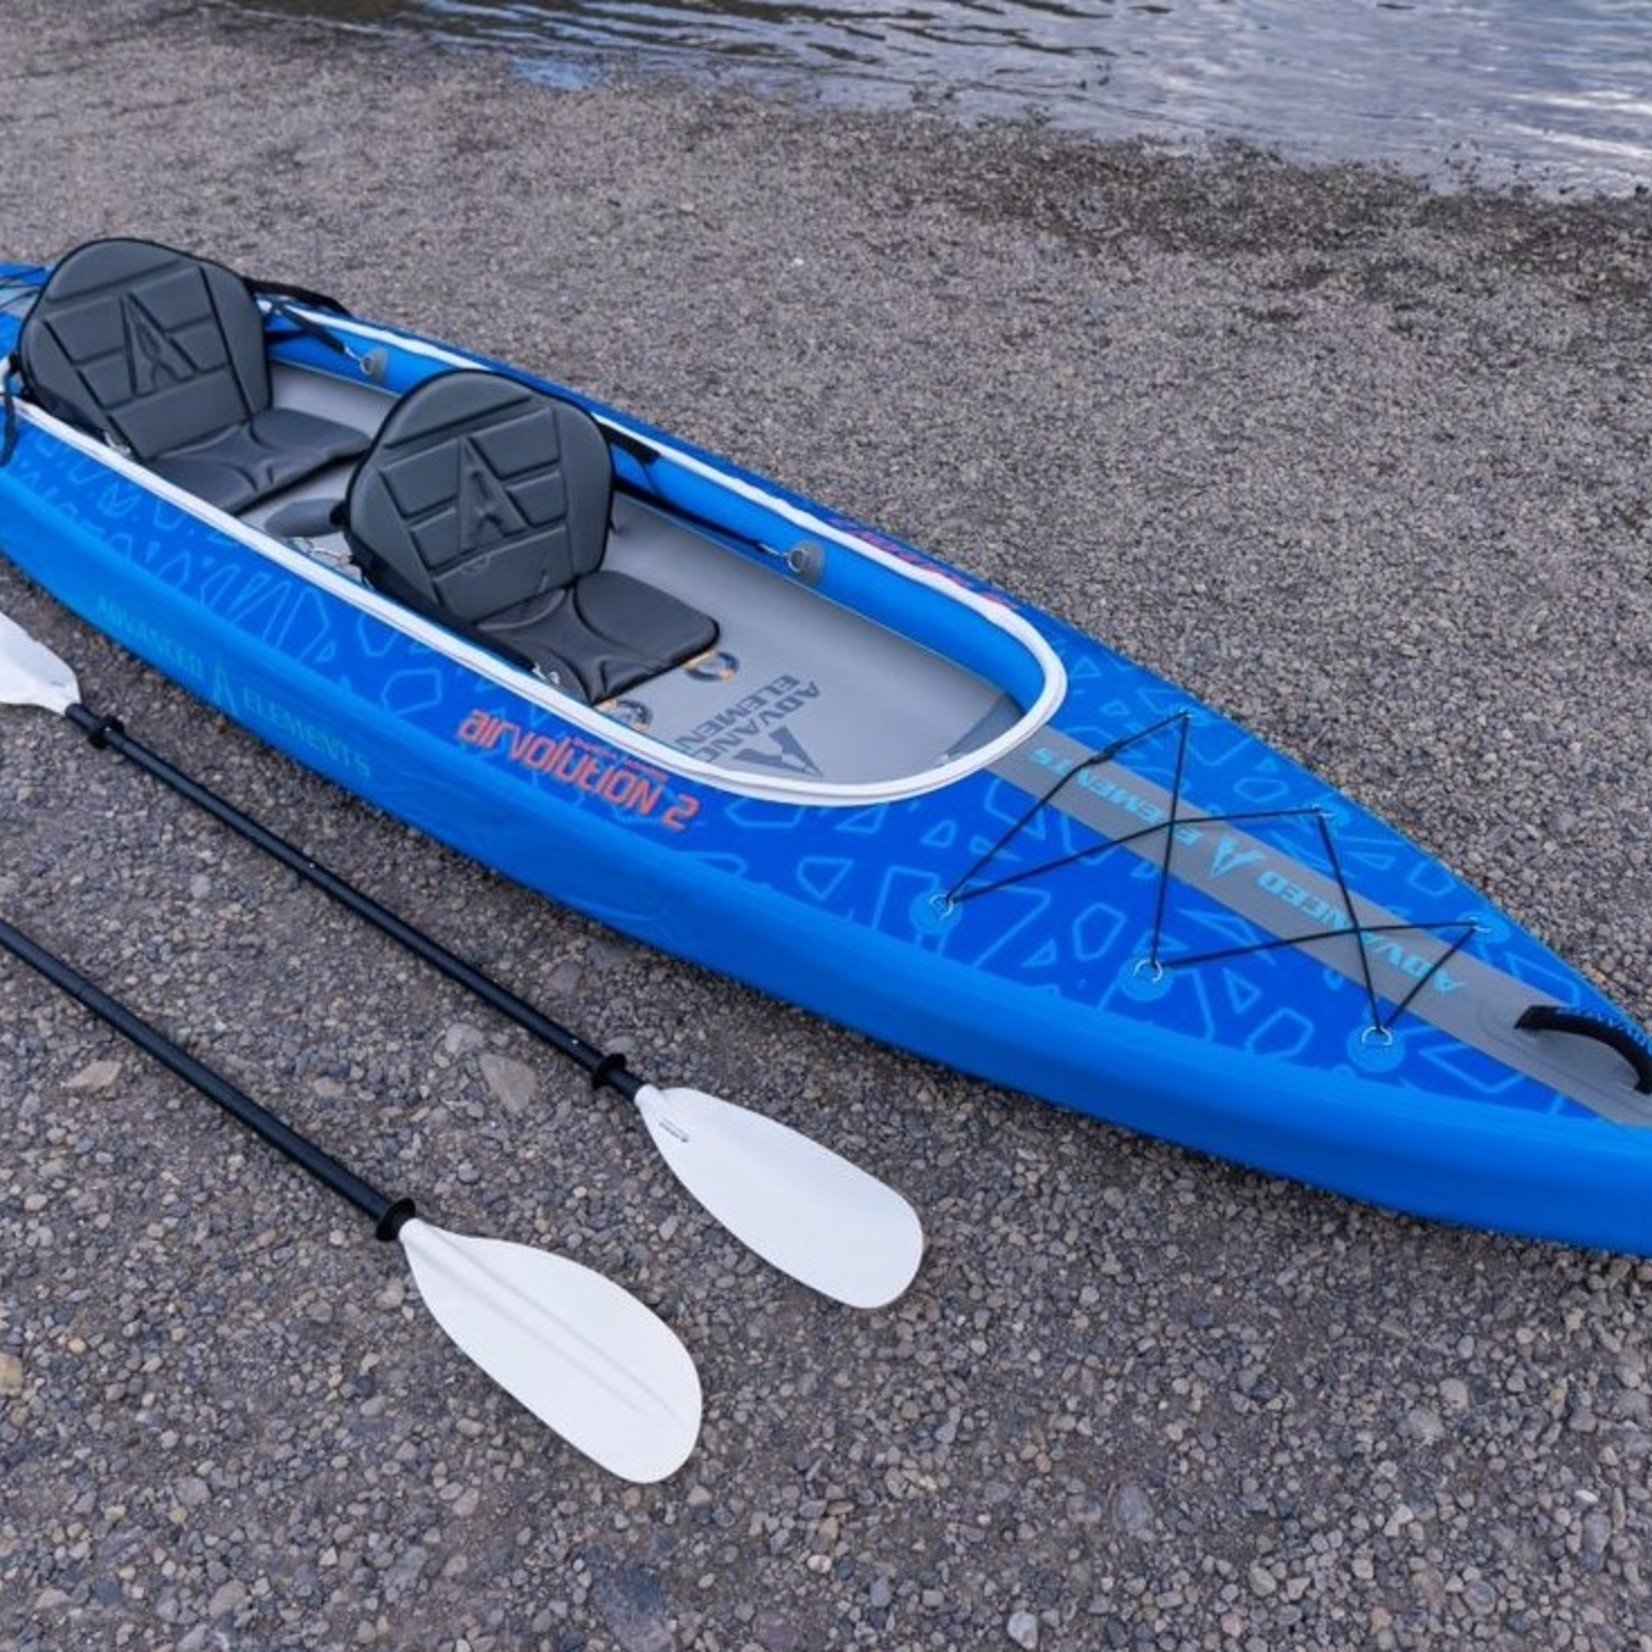 Ex Rental Kayak - SkiBig3